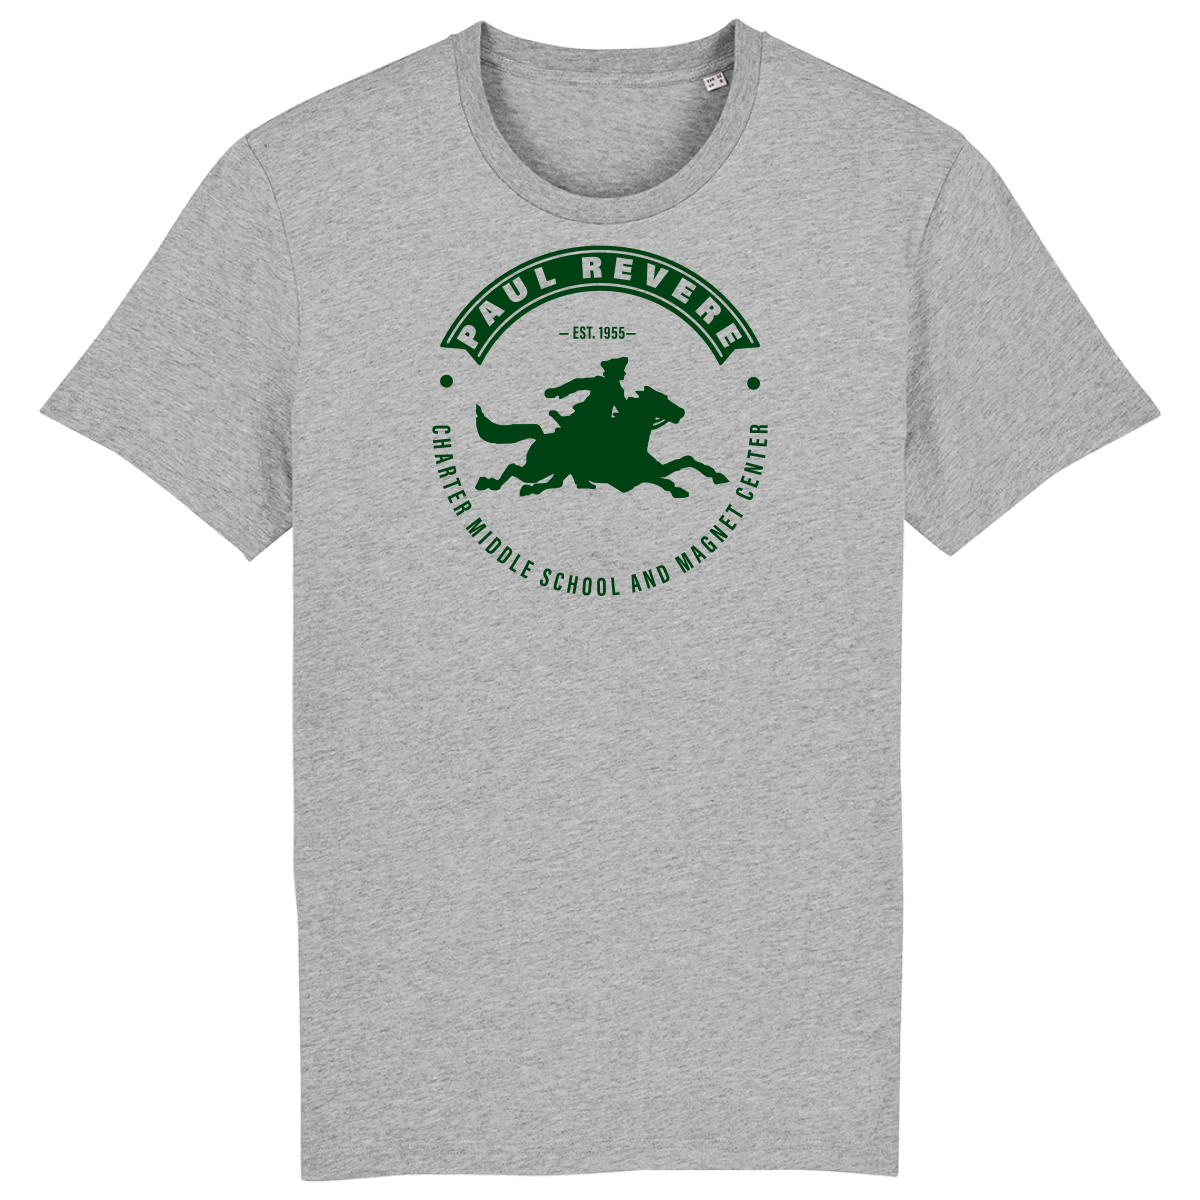 The City T-Shirt – Paul Store Revere